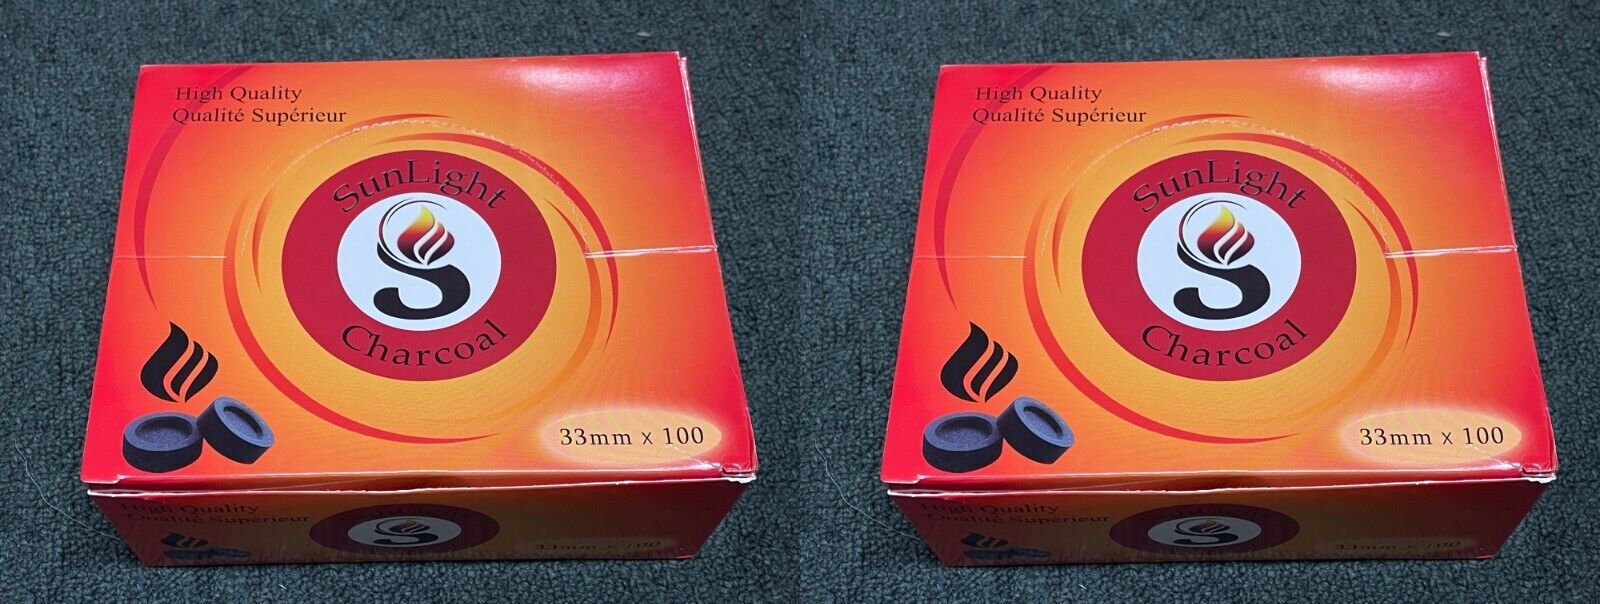 Sunlight Charcoal Instant Burning Coal 33mm x 200 tablets hookah incense burn